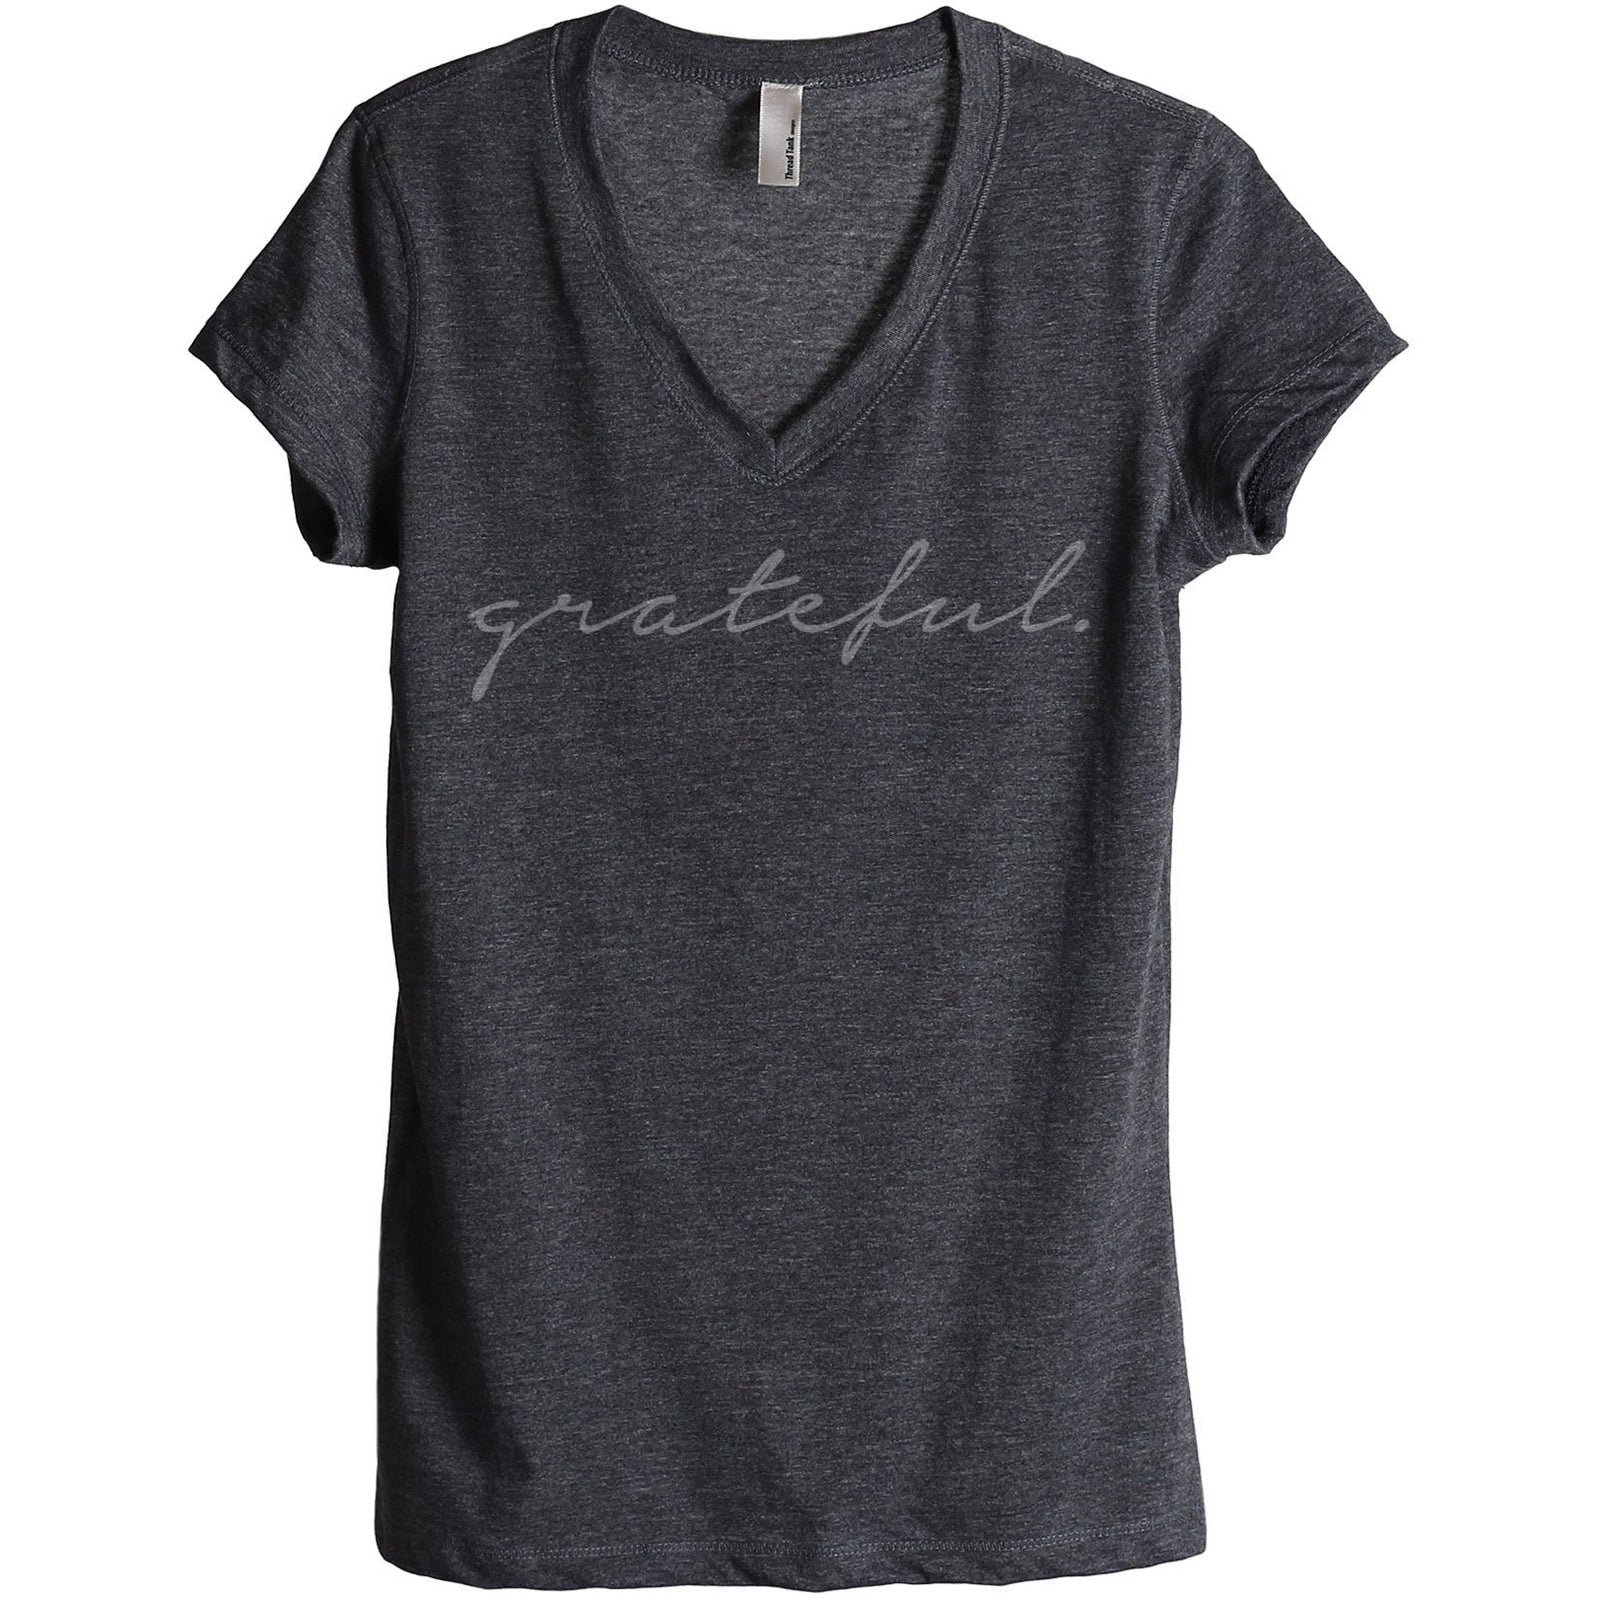 Grateful Women's Relaxed V-Neck T-Shirt Tee Charcoal